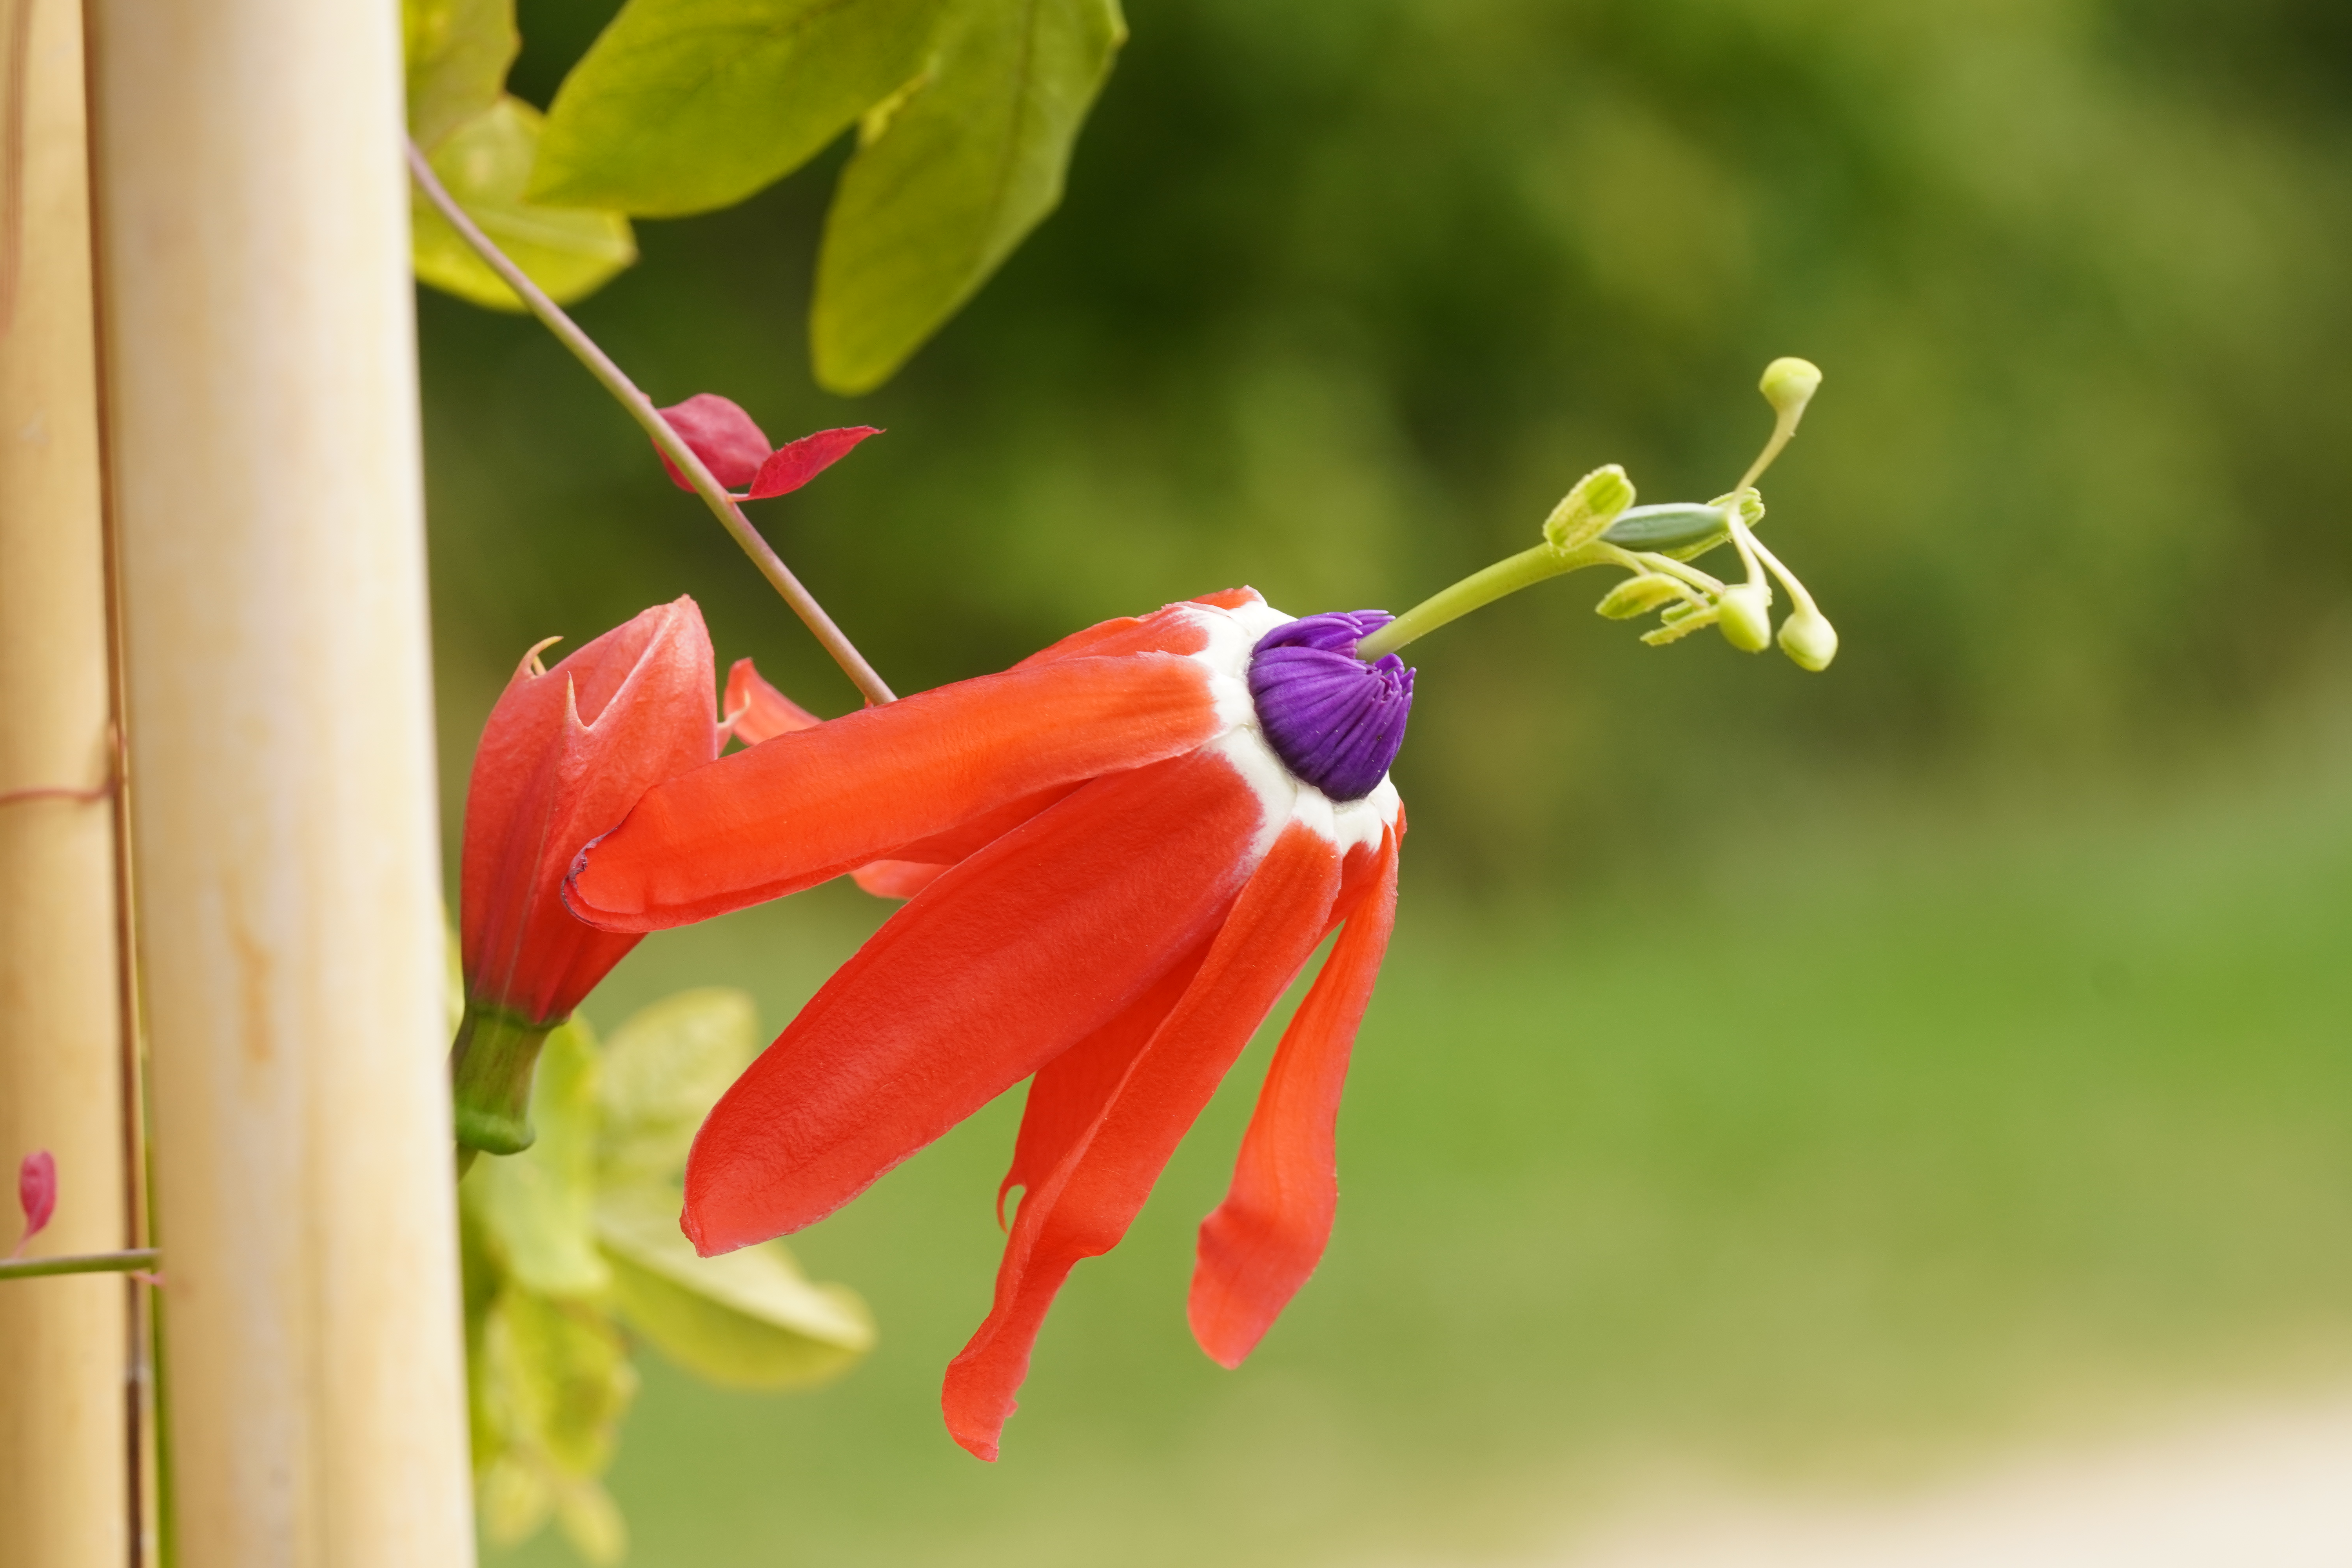 Passiflora edmundoi